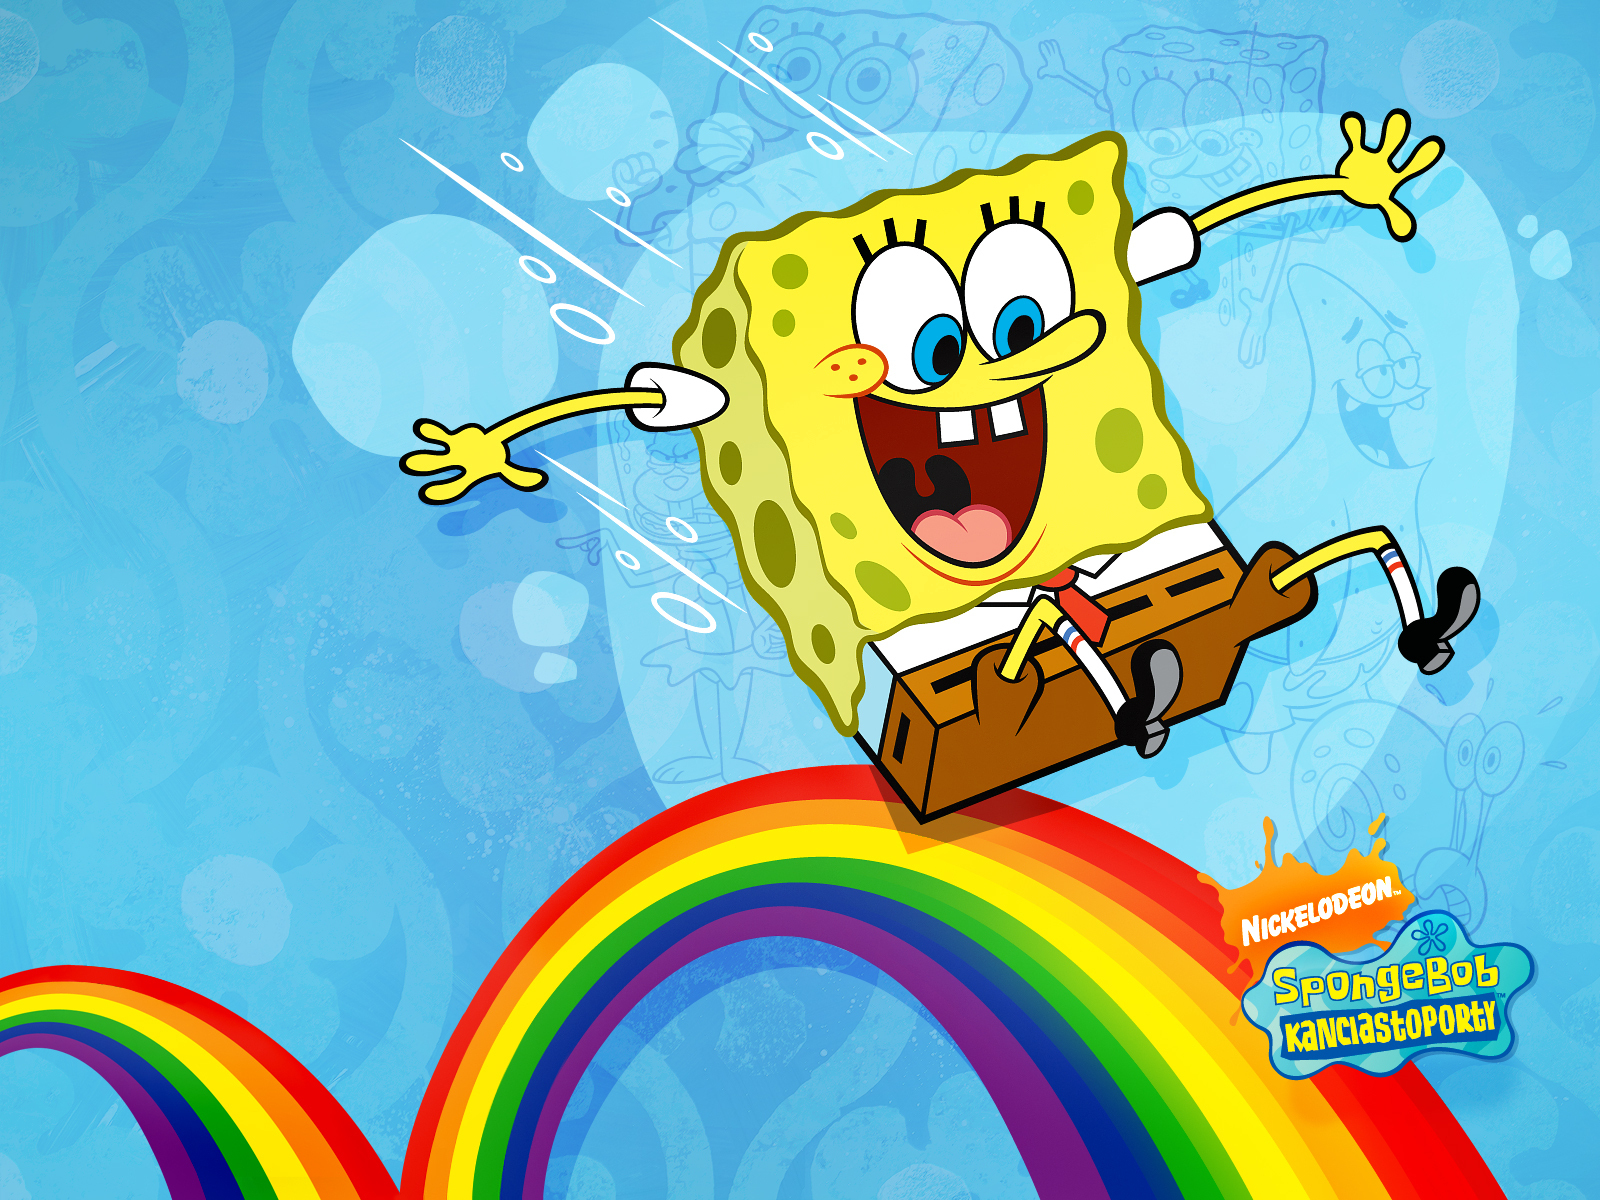 Spongebob Squarepants Image Rainbow HD Wallpaper And